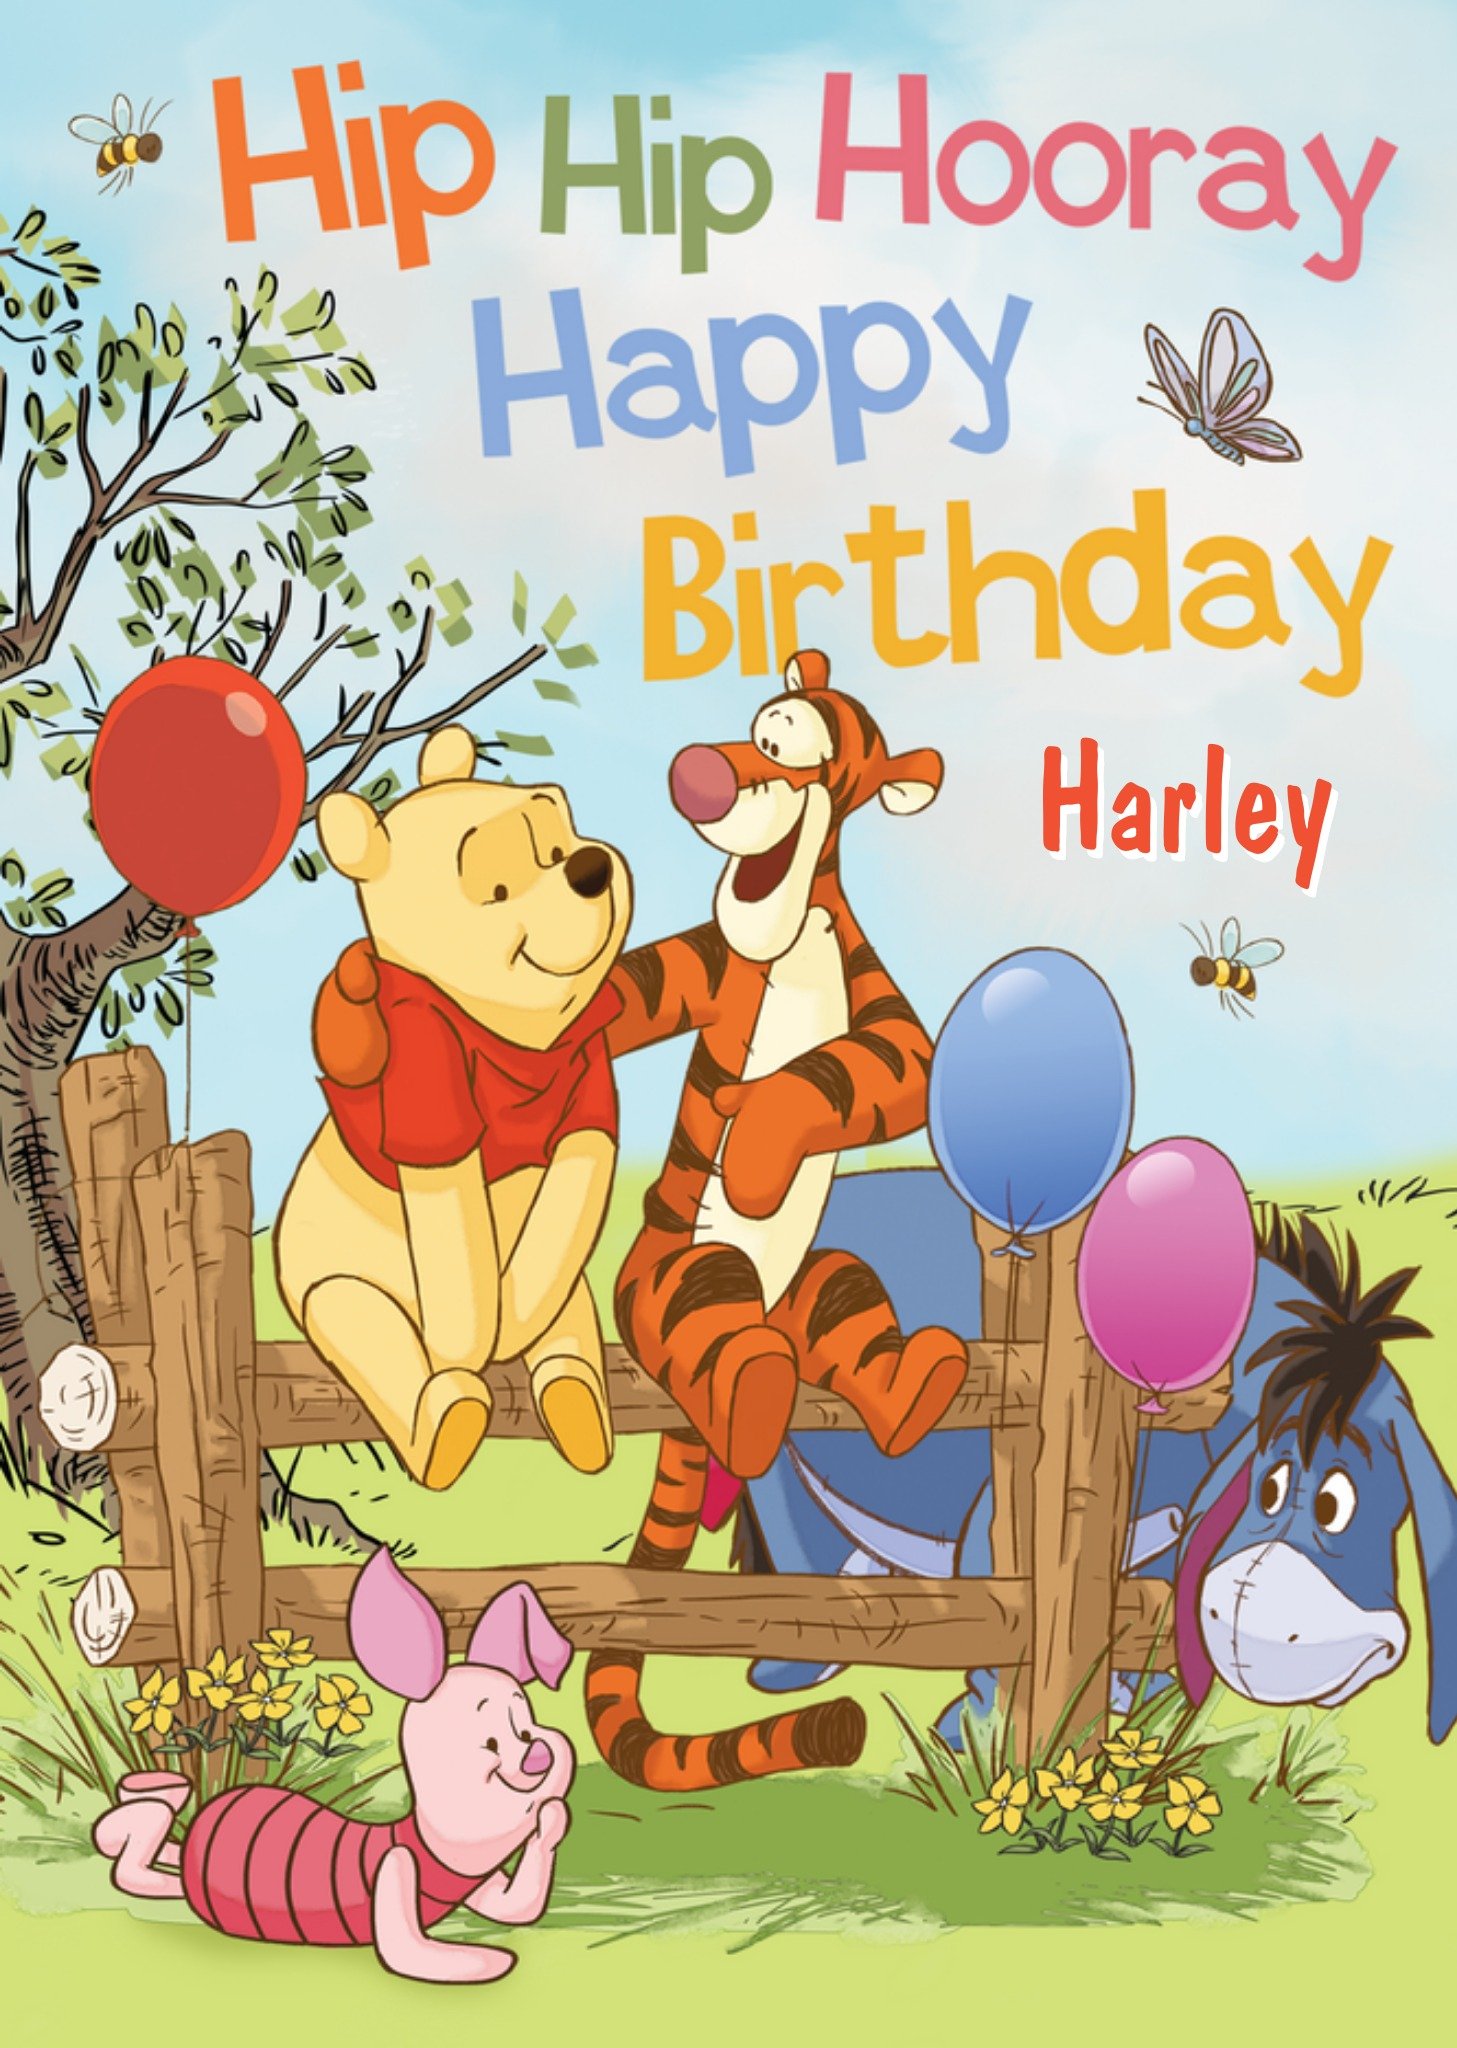 Disney Winnie The Pooh Hip Hip Hooray Happy Birthday Card Ecard